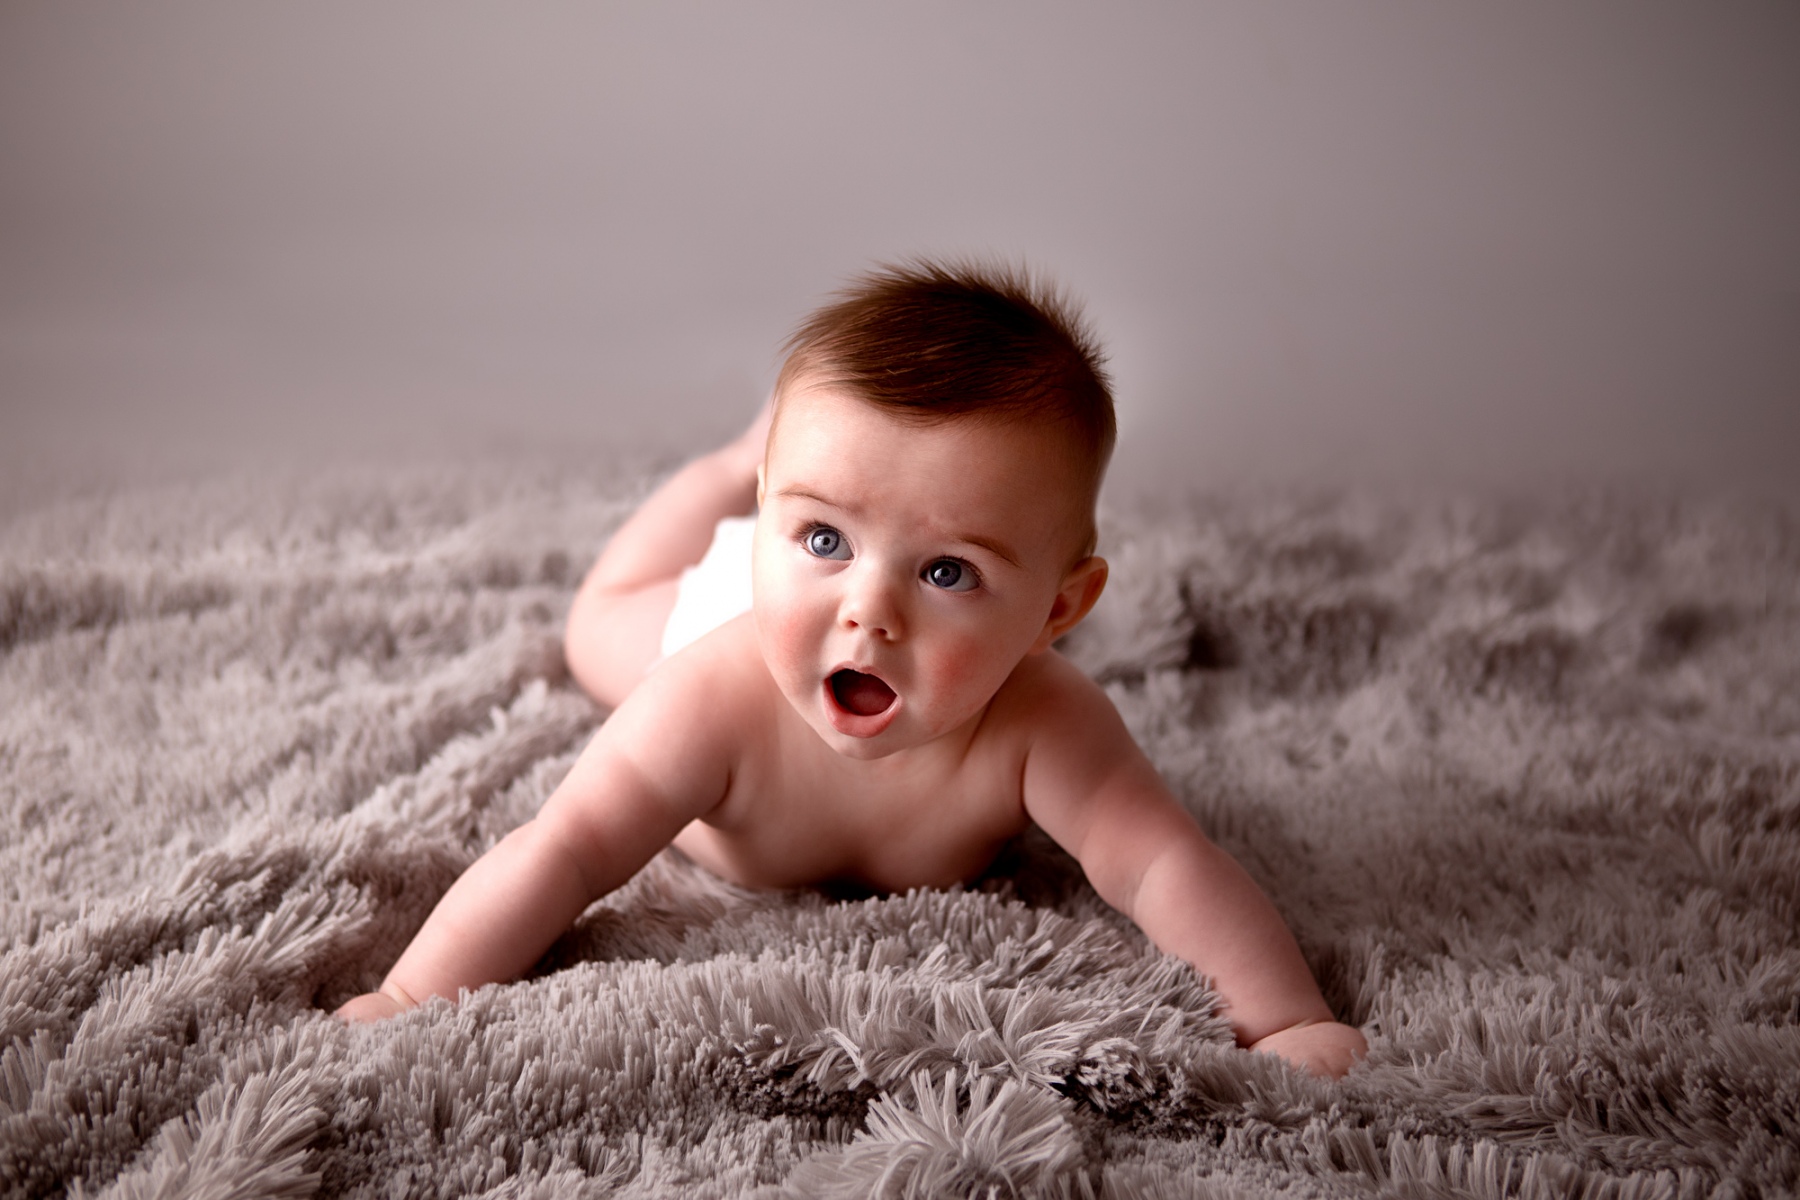 6 month baby boy portrait ideas